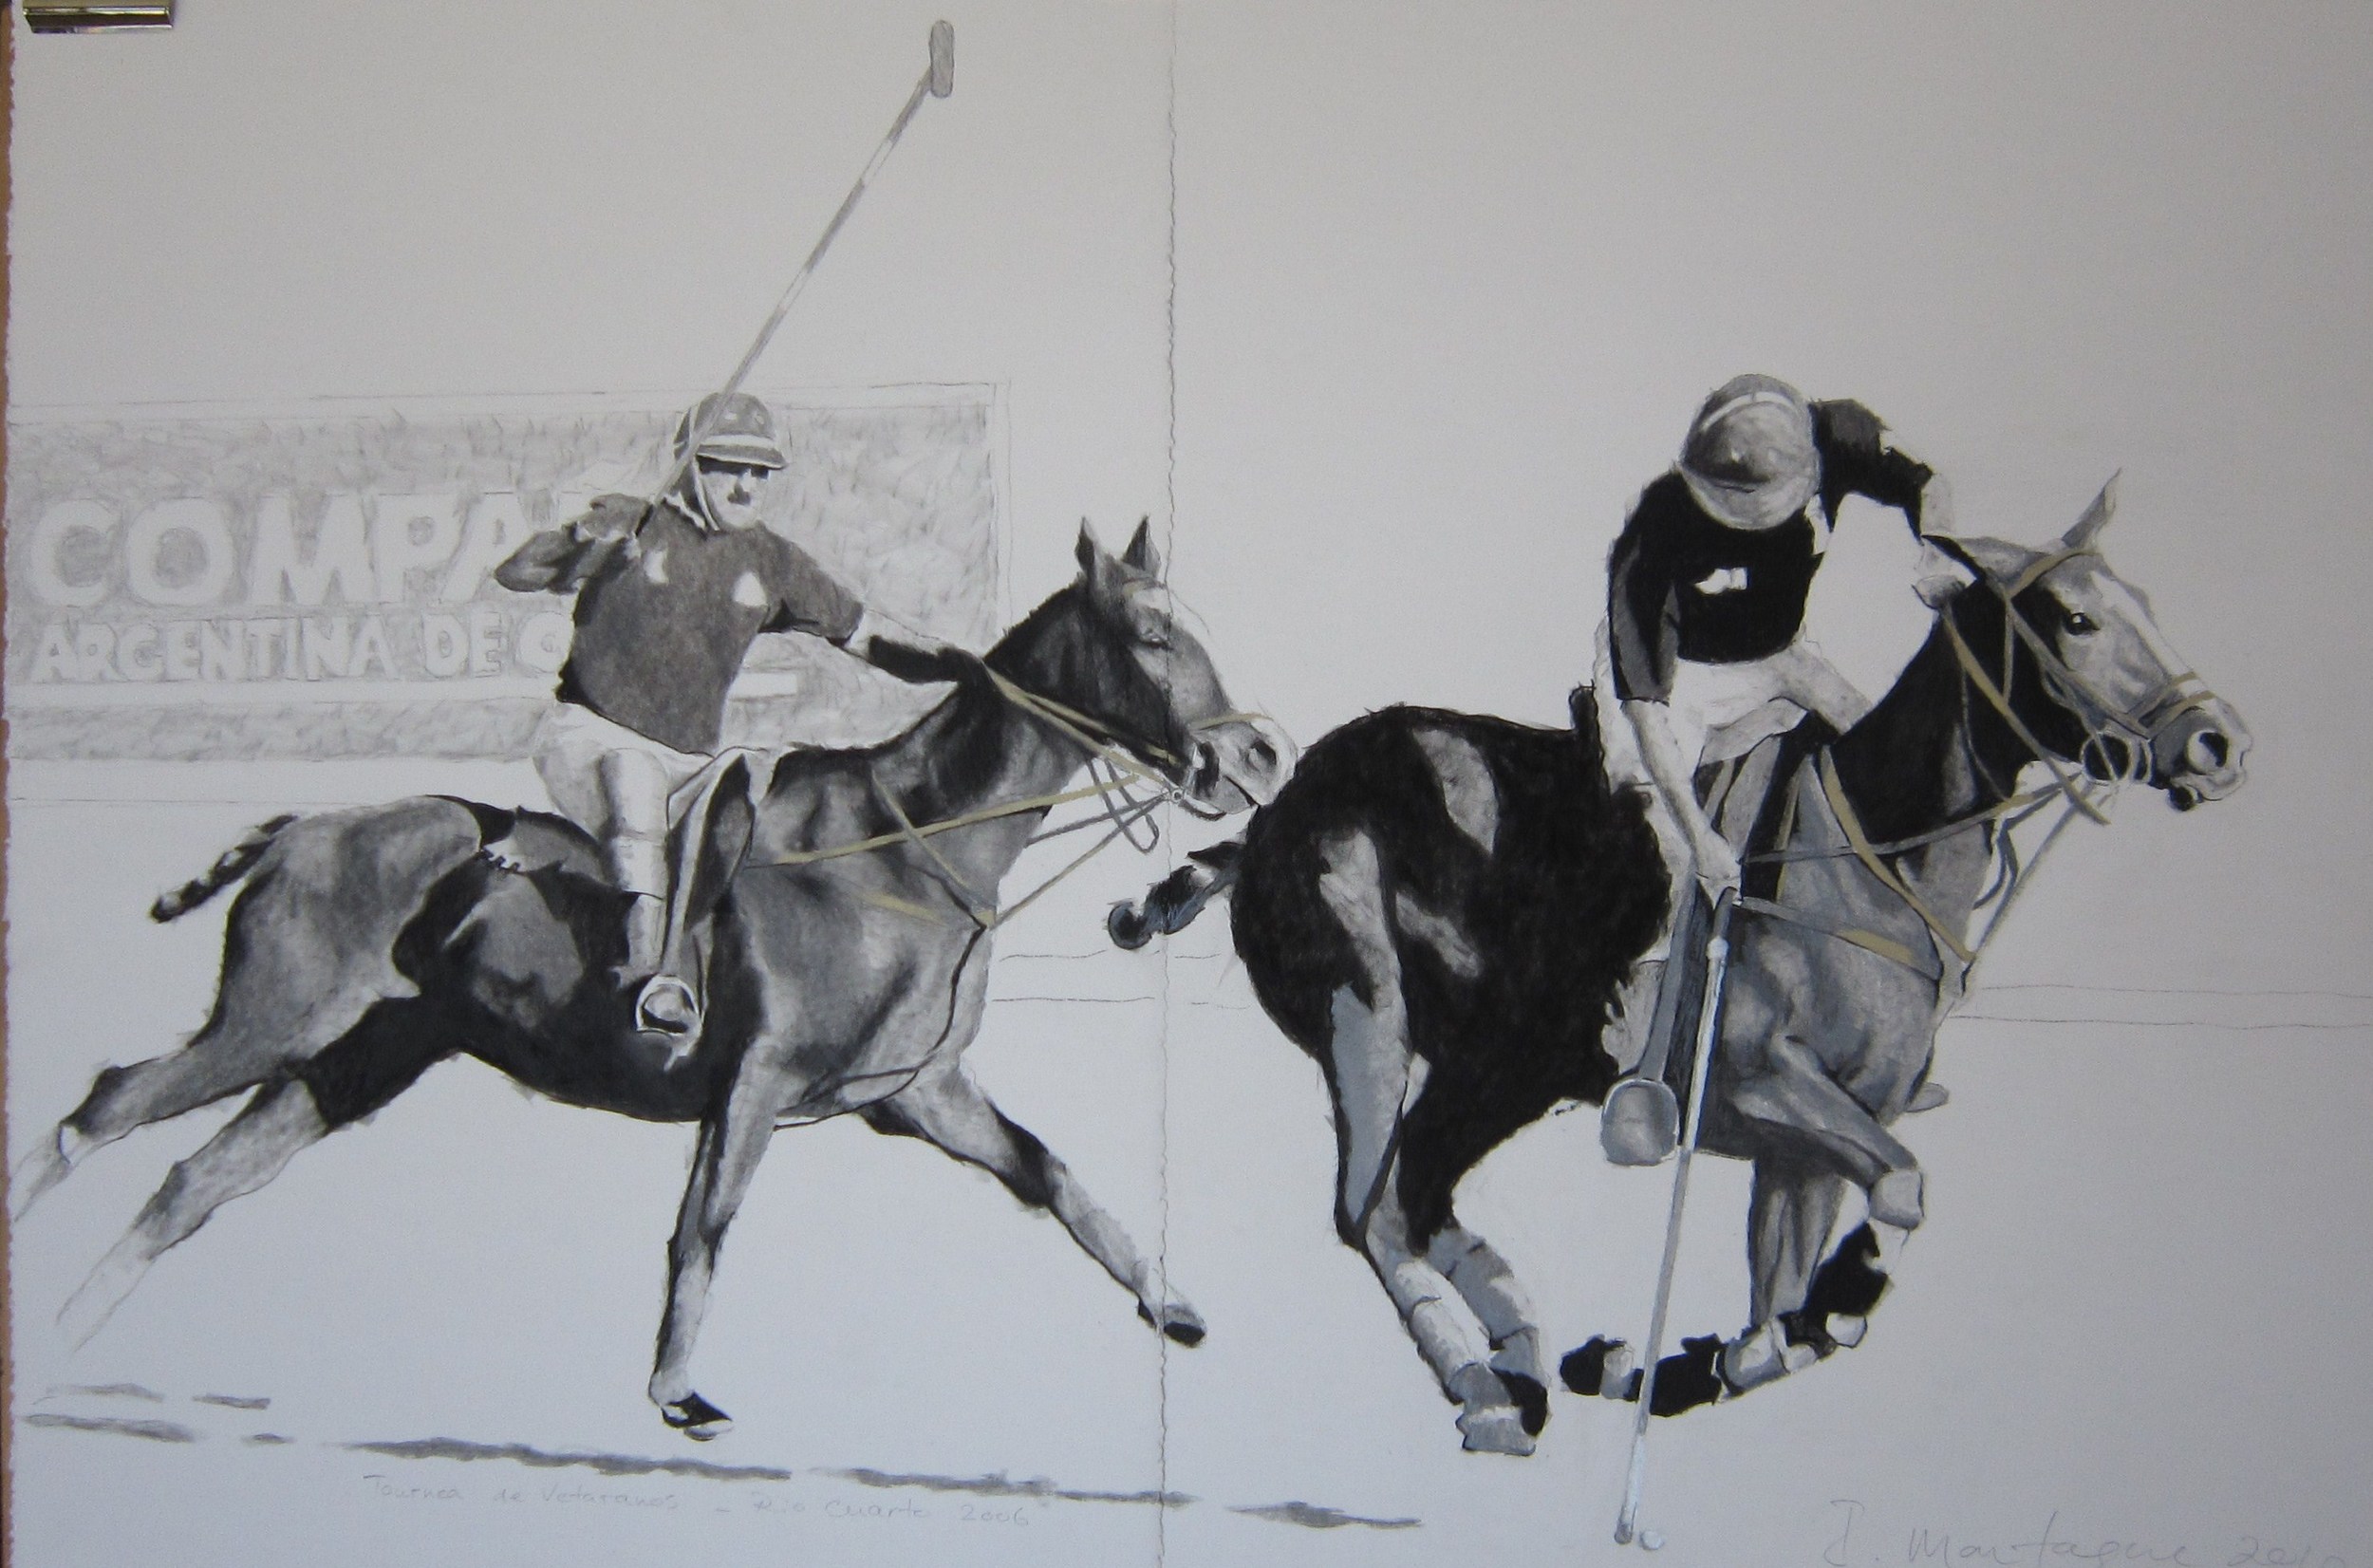    Veteran Polo, Argentina.  &nbsp;Charcoal on rag-paper.&nbsp;56 x 140 cm.&nbsp; ©&nbsp; 2012 Ida Montague.&nbsp;Private Collection, Toowoomba 